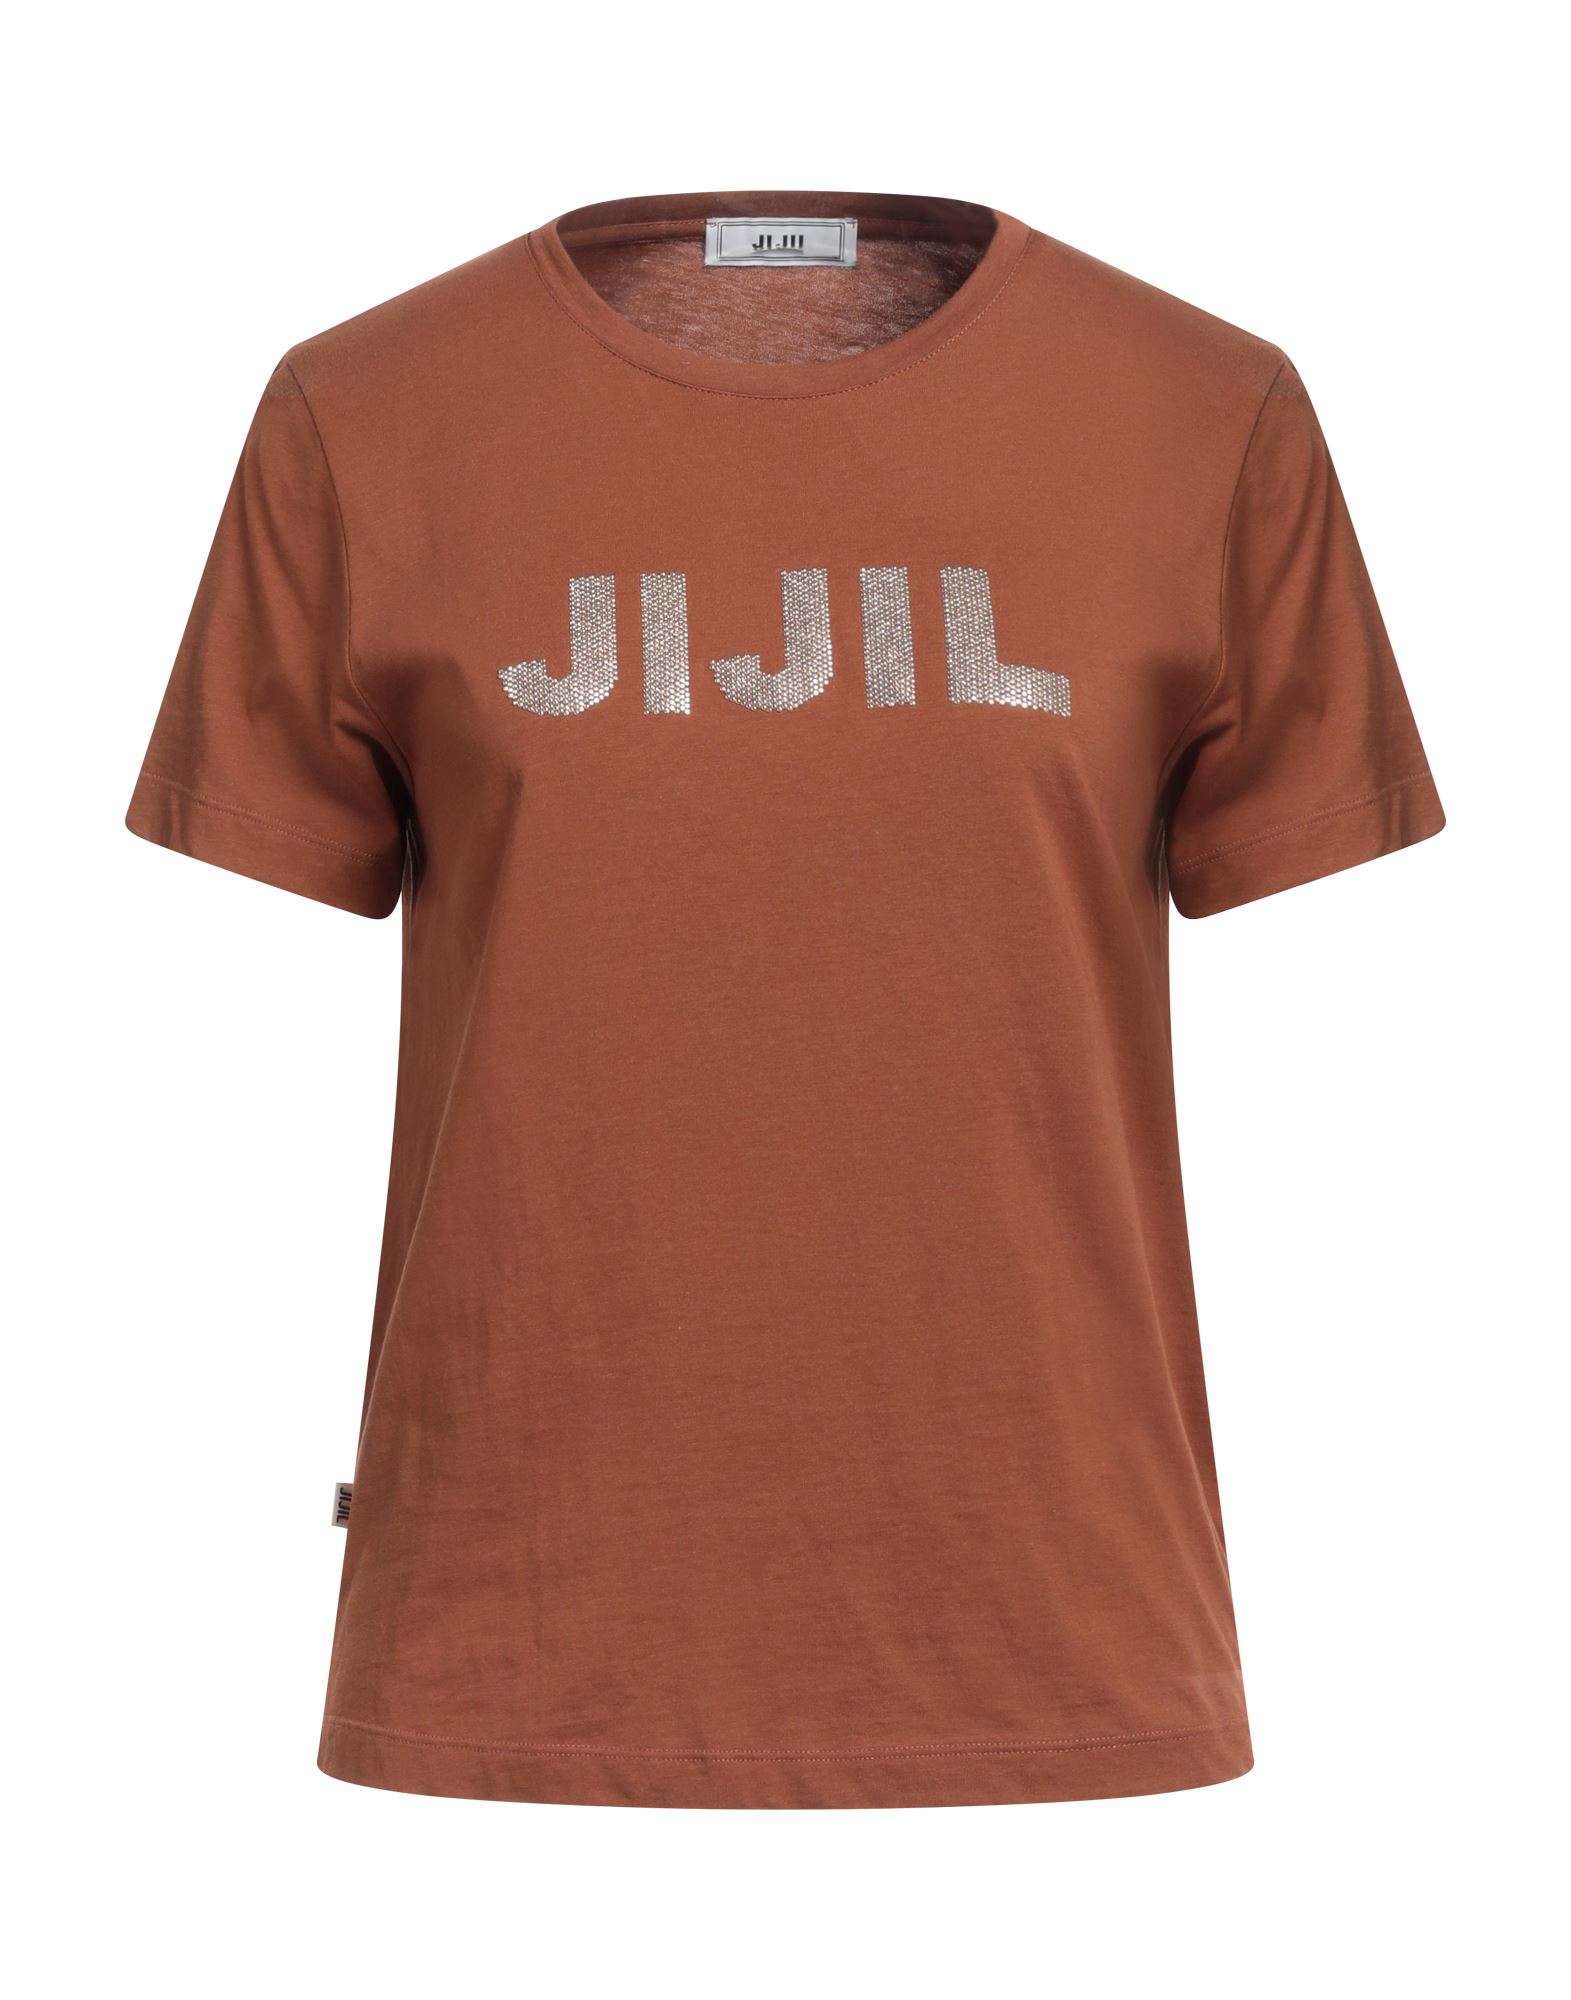 JIJIL T-shirts Damen Braun von JIJIL